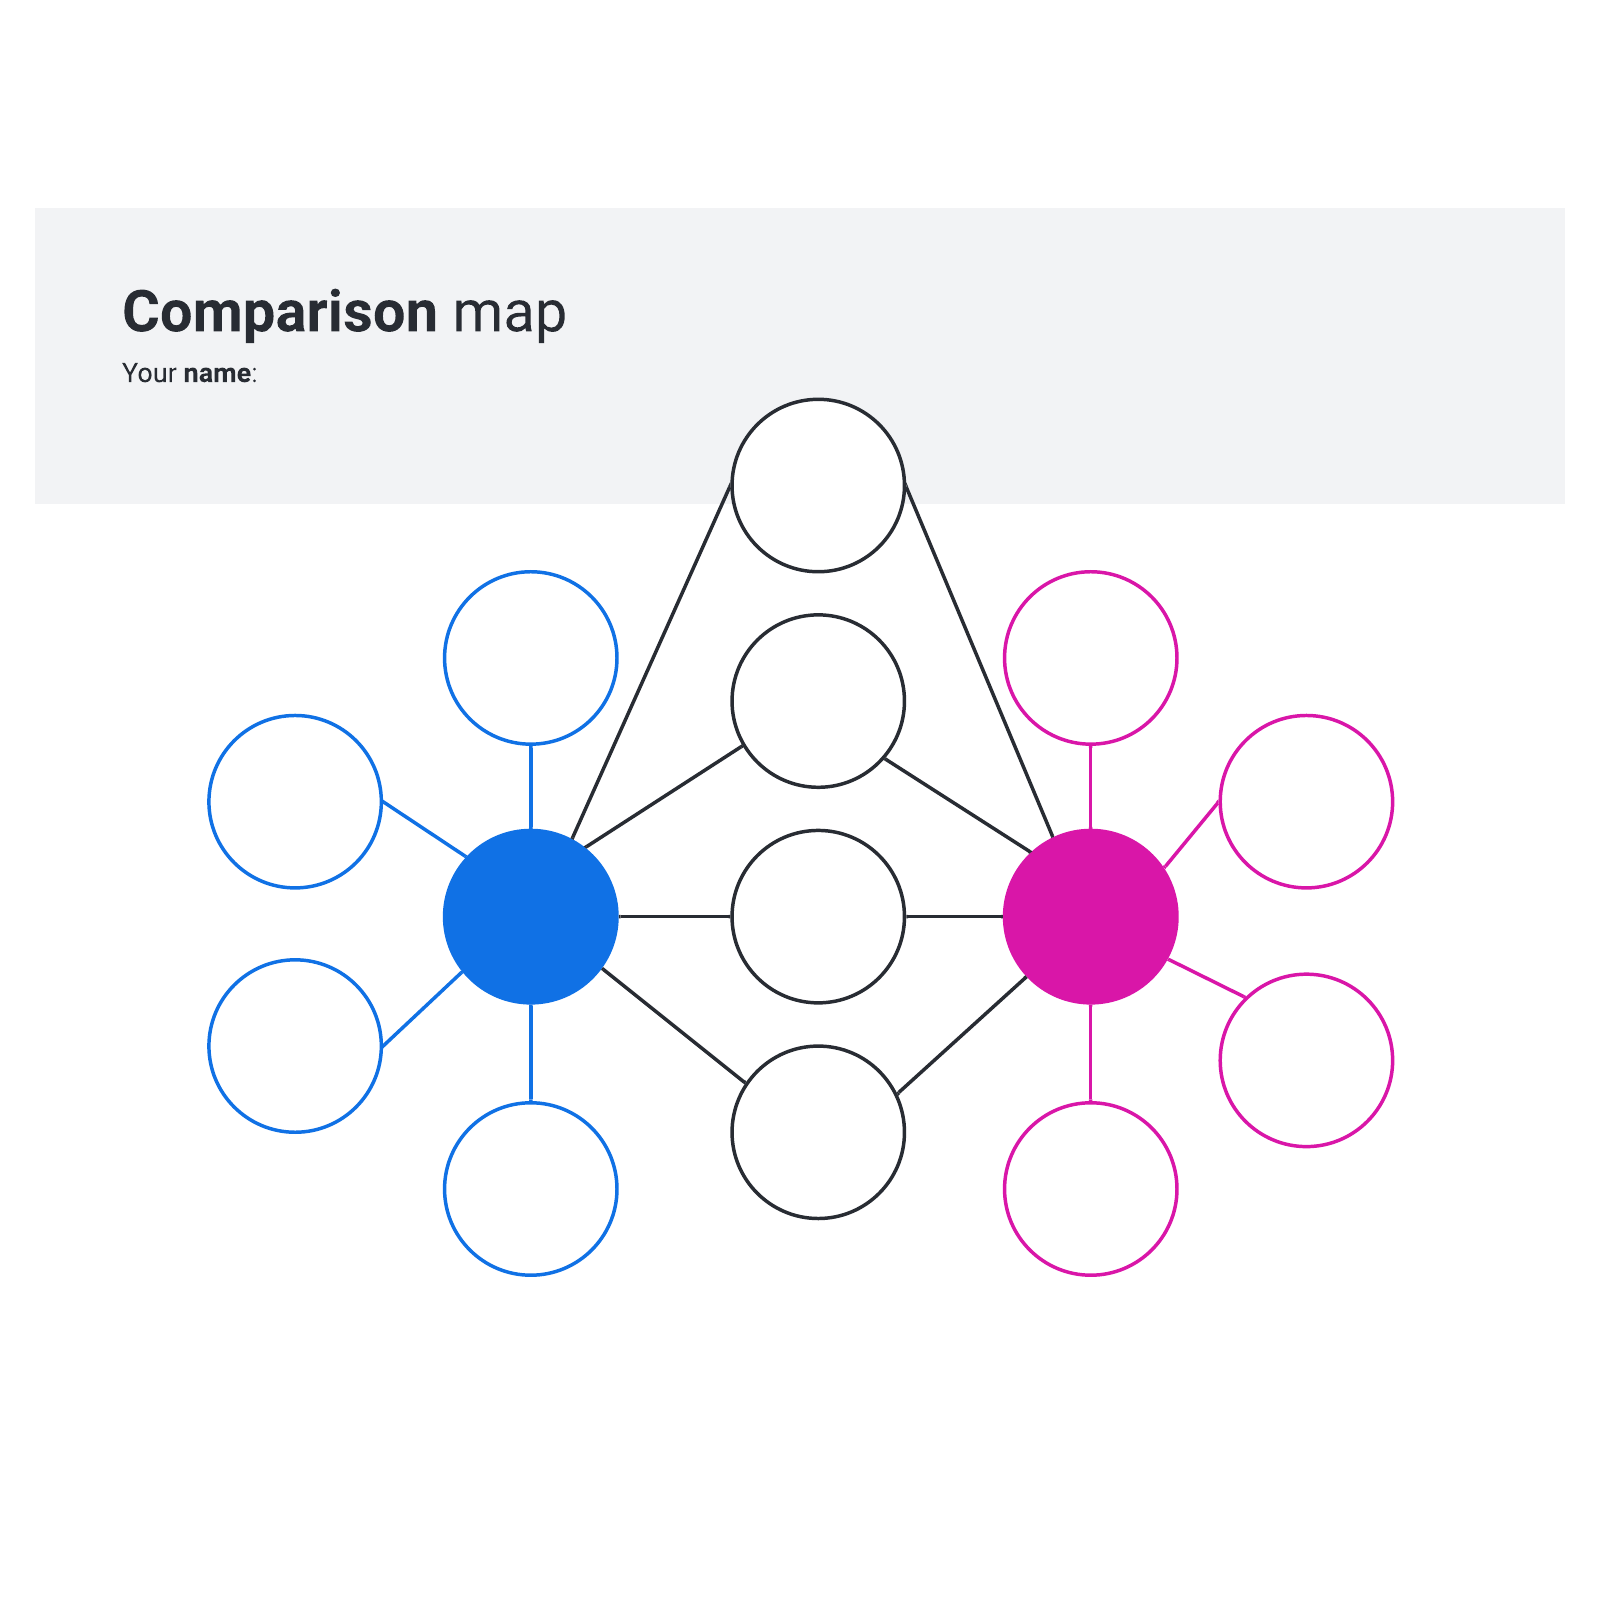 Comparison map example